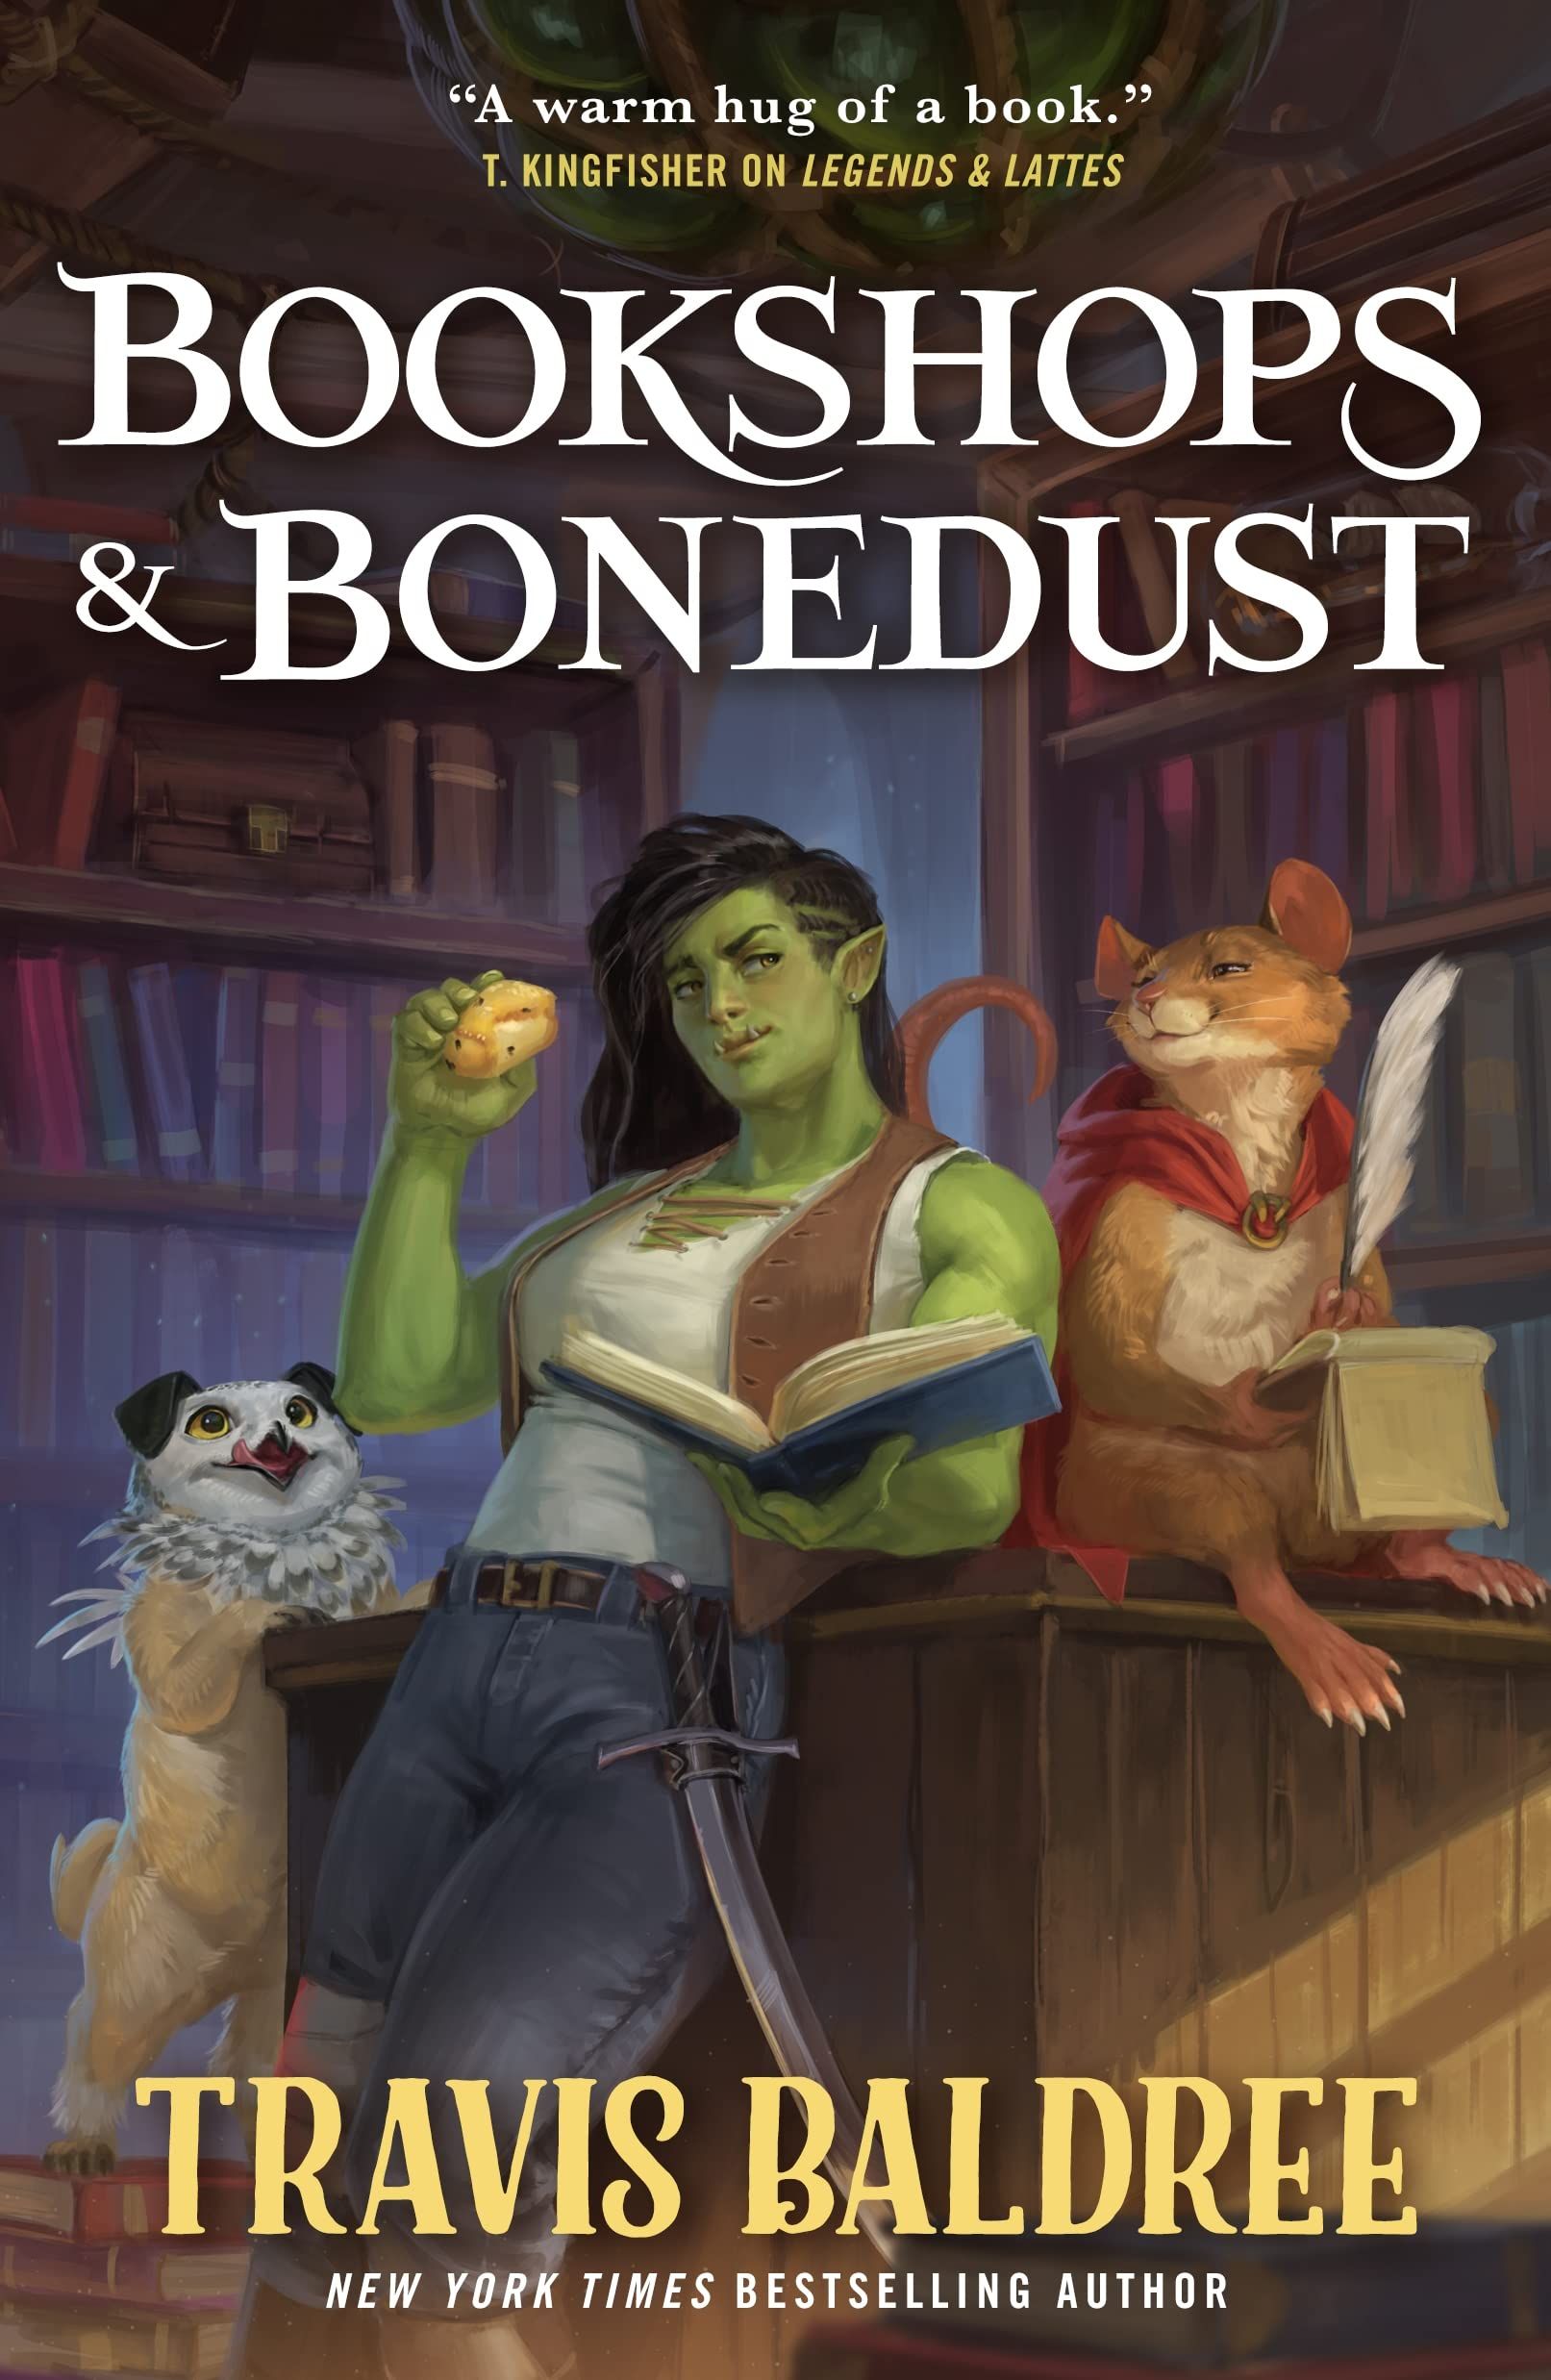 Bookshops & Bonedust by Travis Baldree book cover